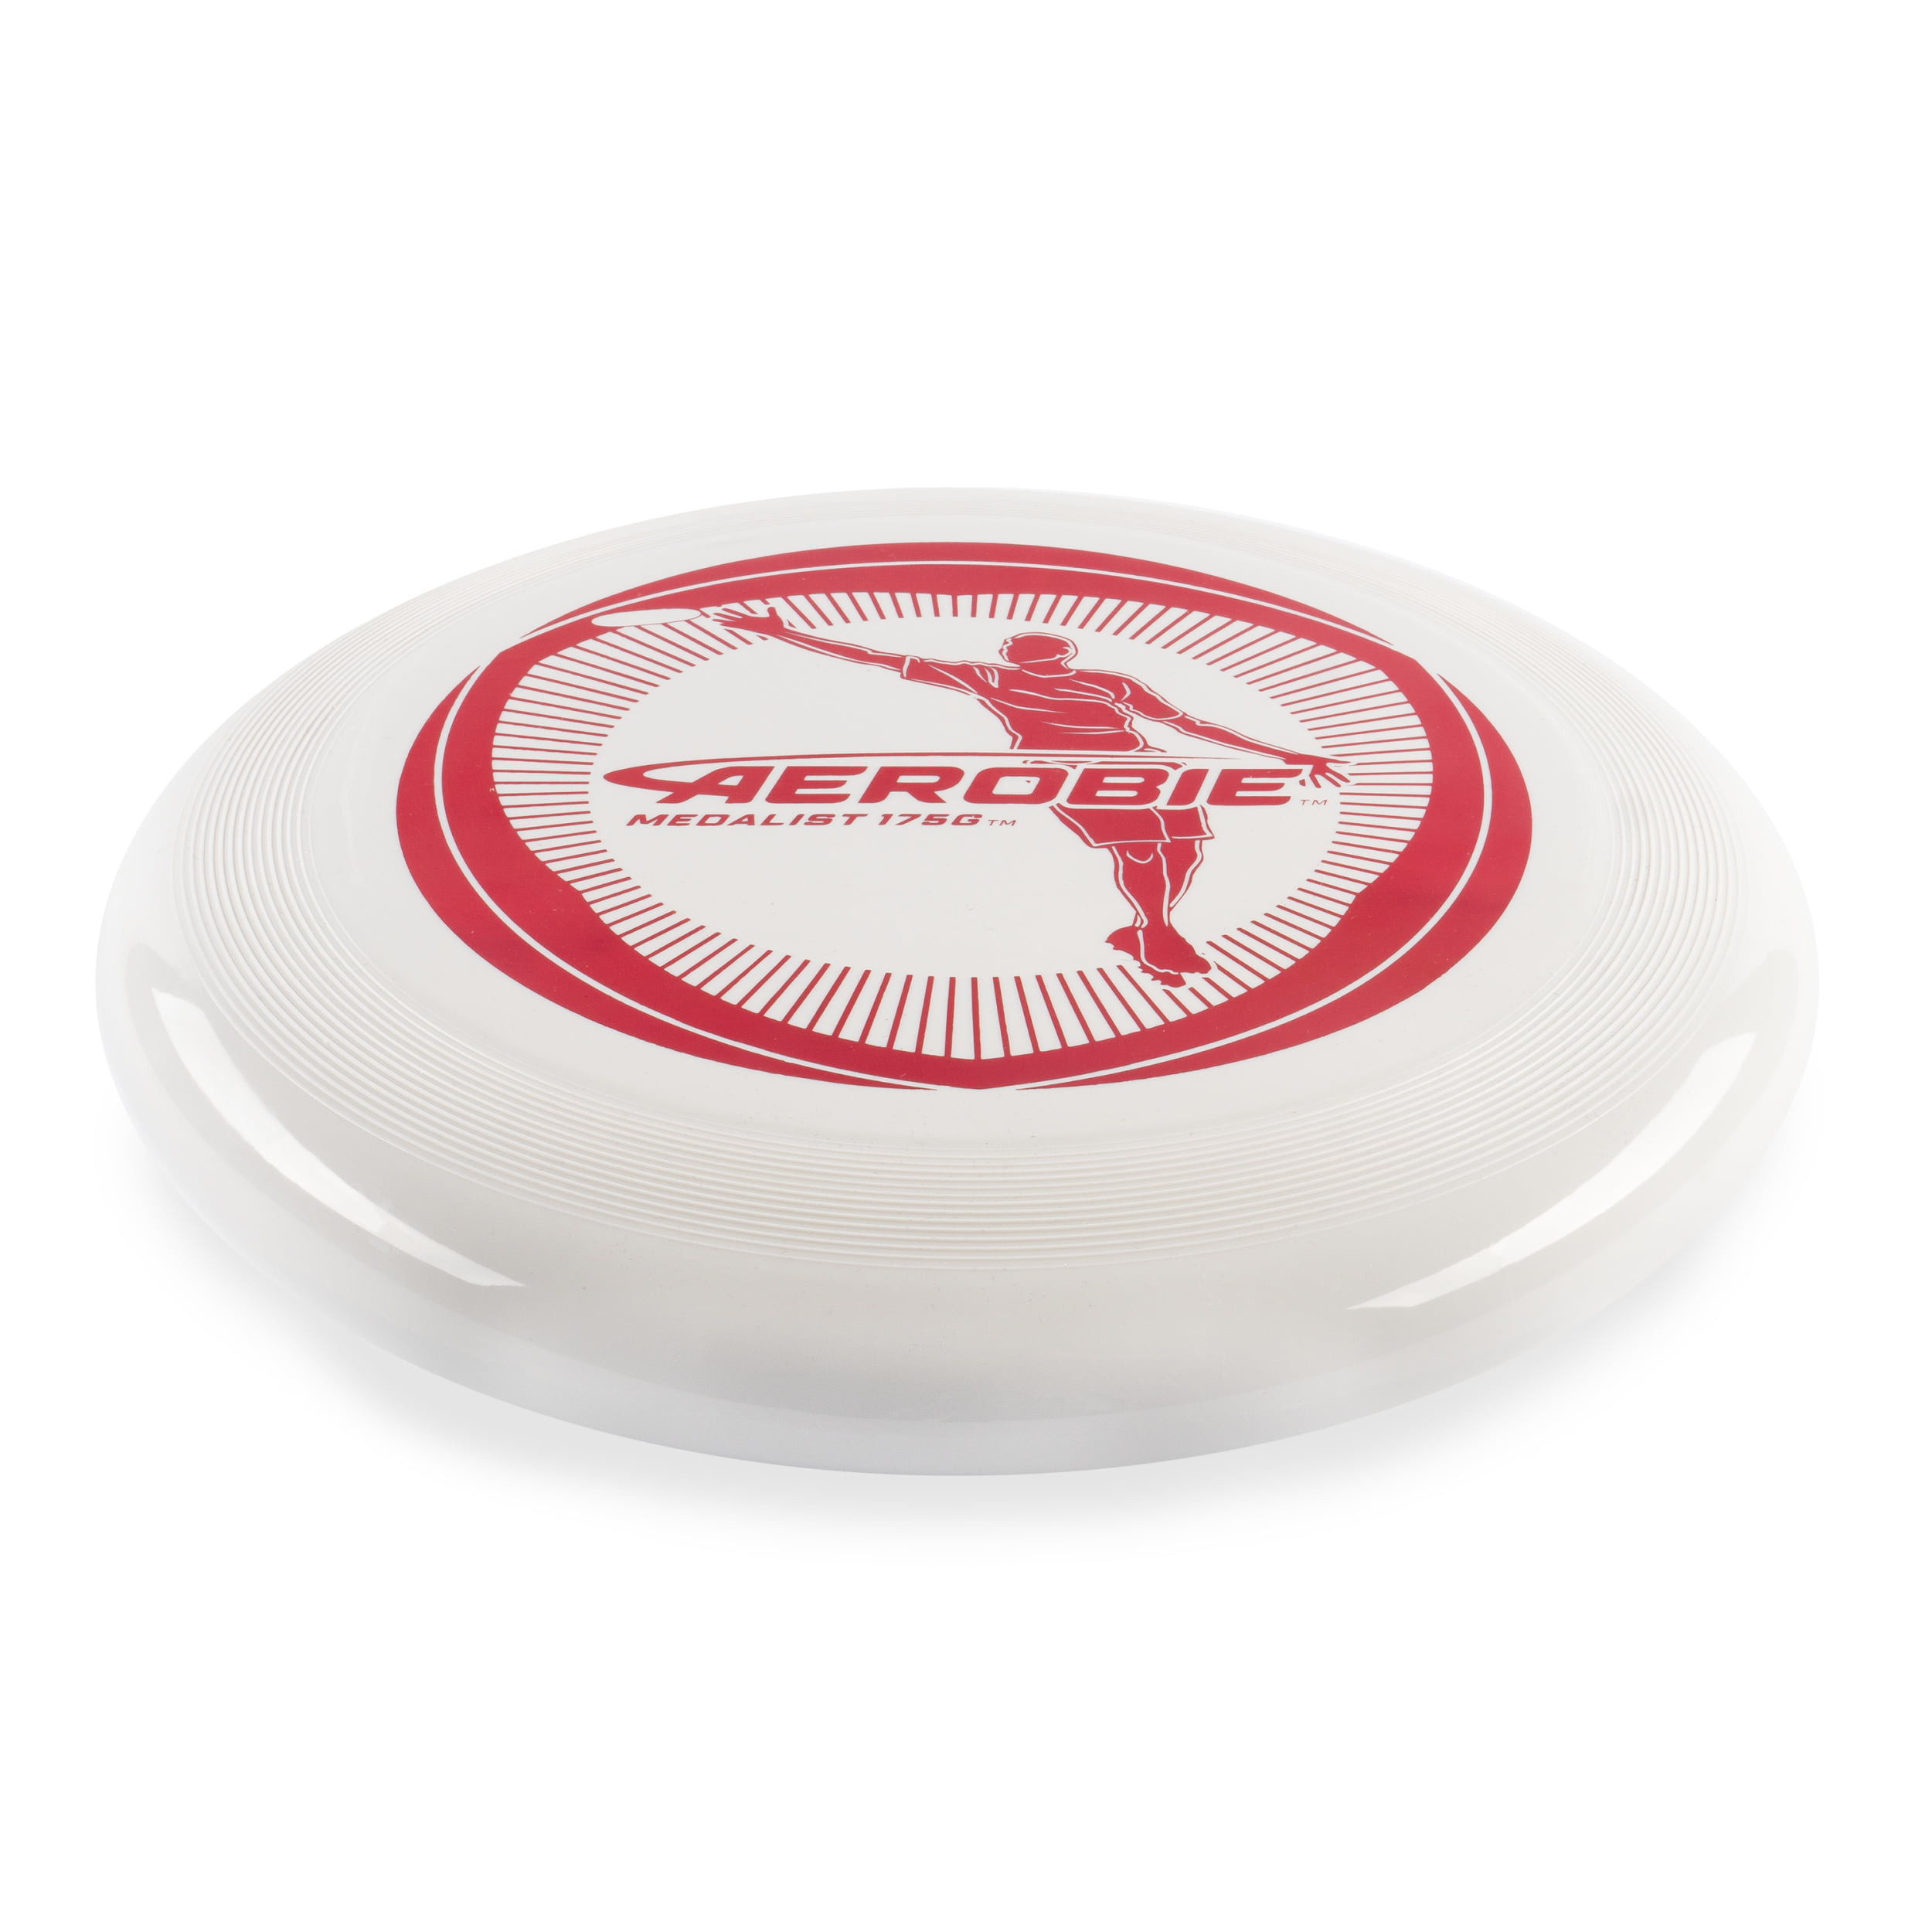 Details about   Aerobie Medalist 175G Metallic Red Frisbee Outdoor Sport Flying Disc Garden Game 